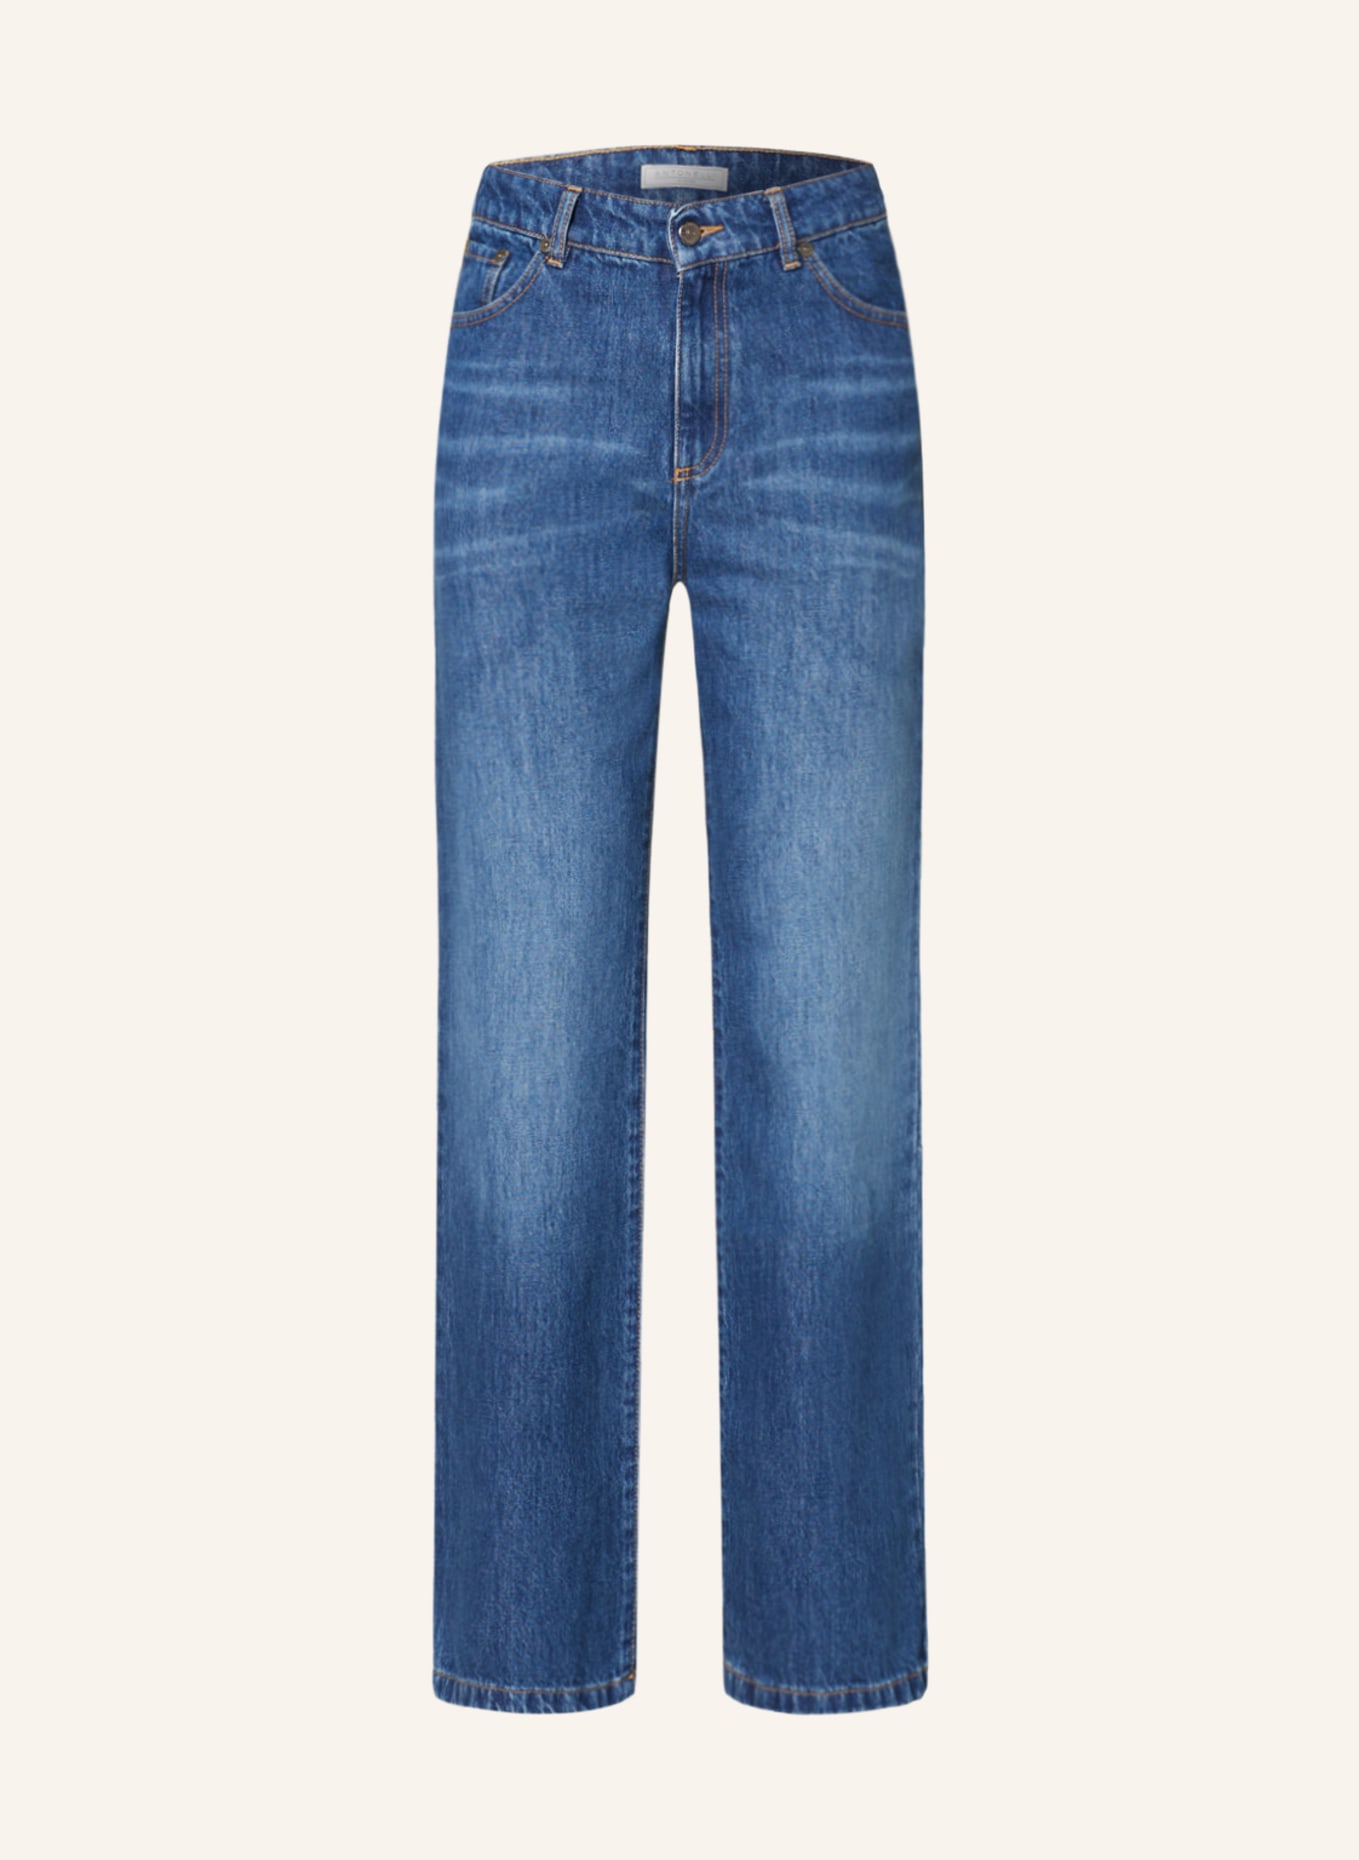 ANTONELLI firenze Straight Jeans PETER, Farbe: 810 denim blue (Bild 1)